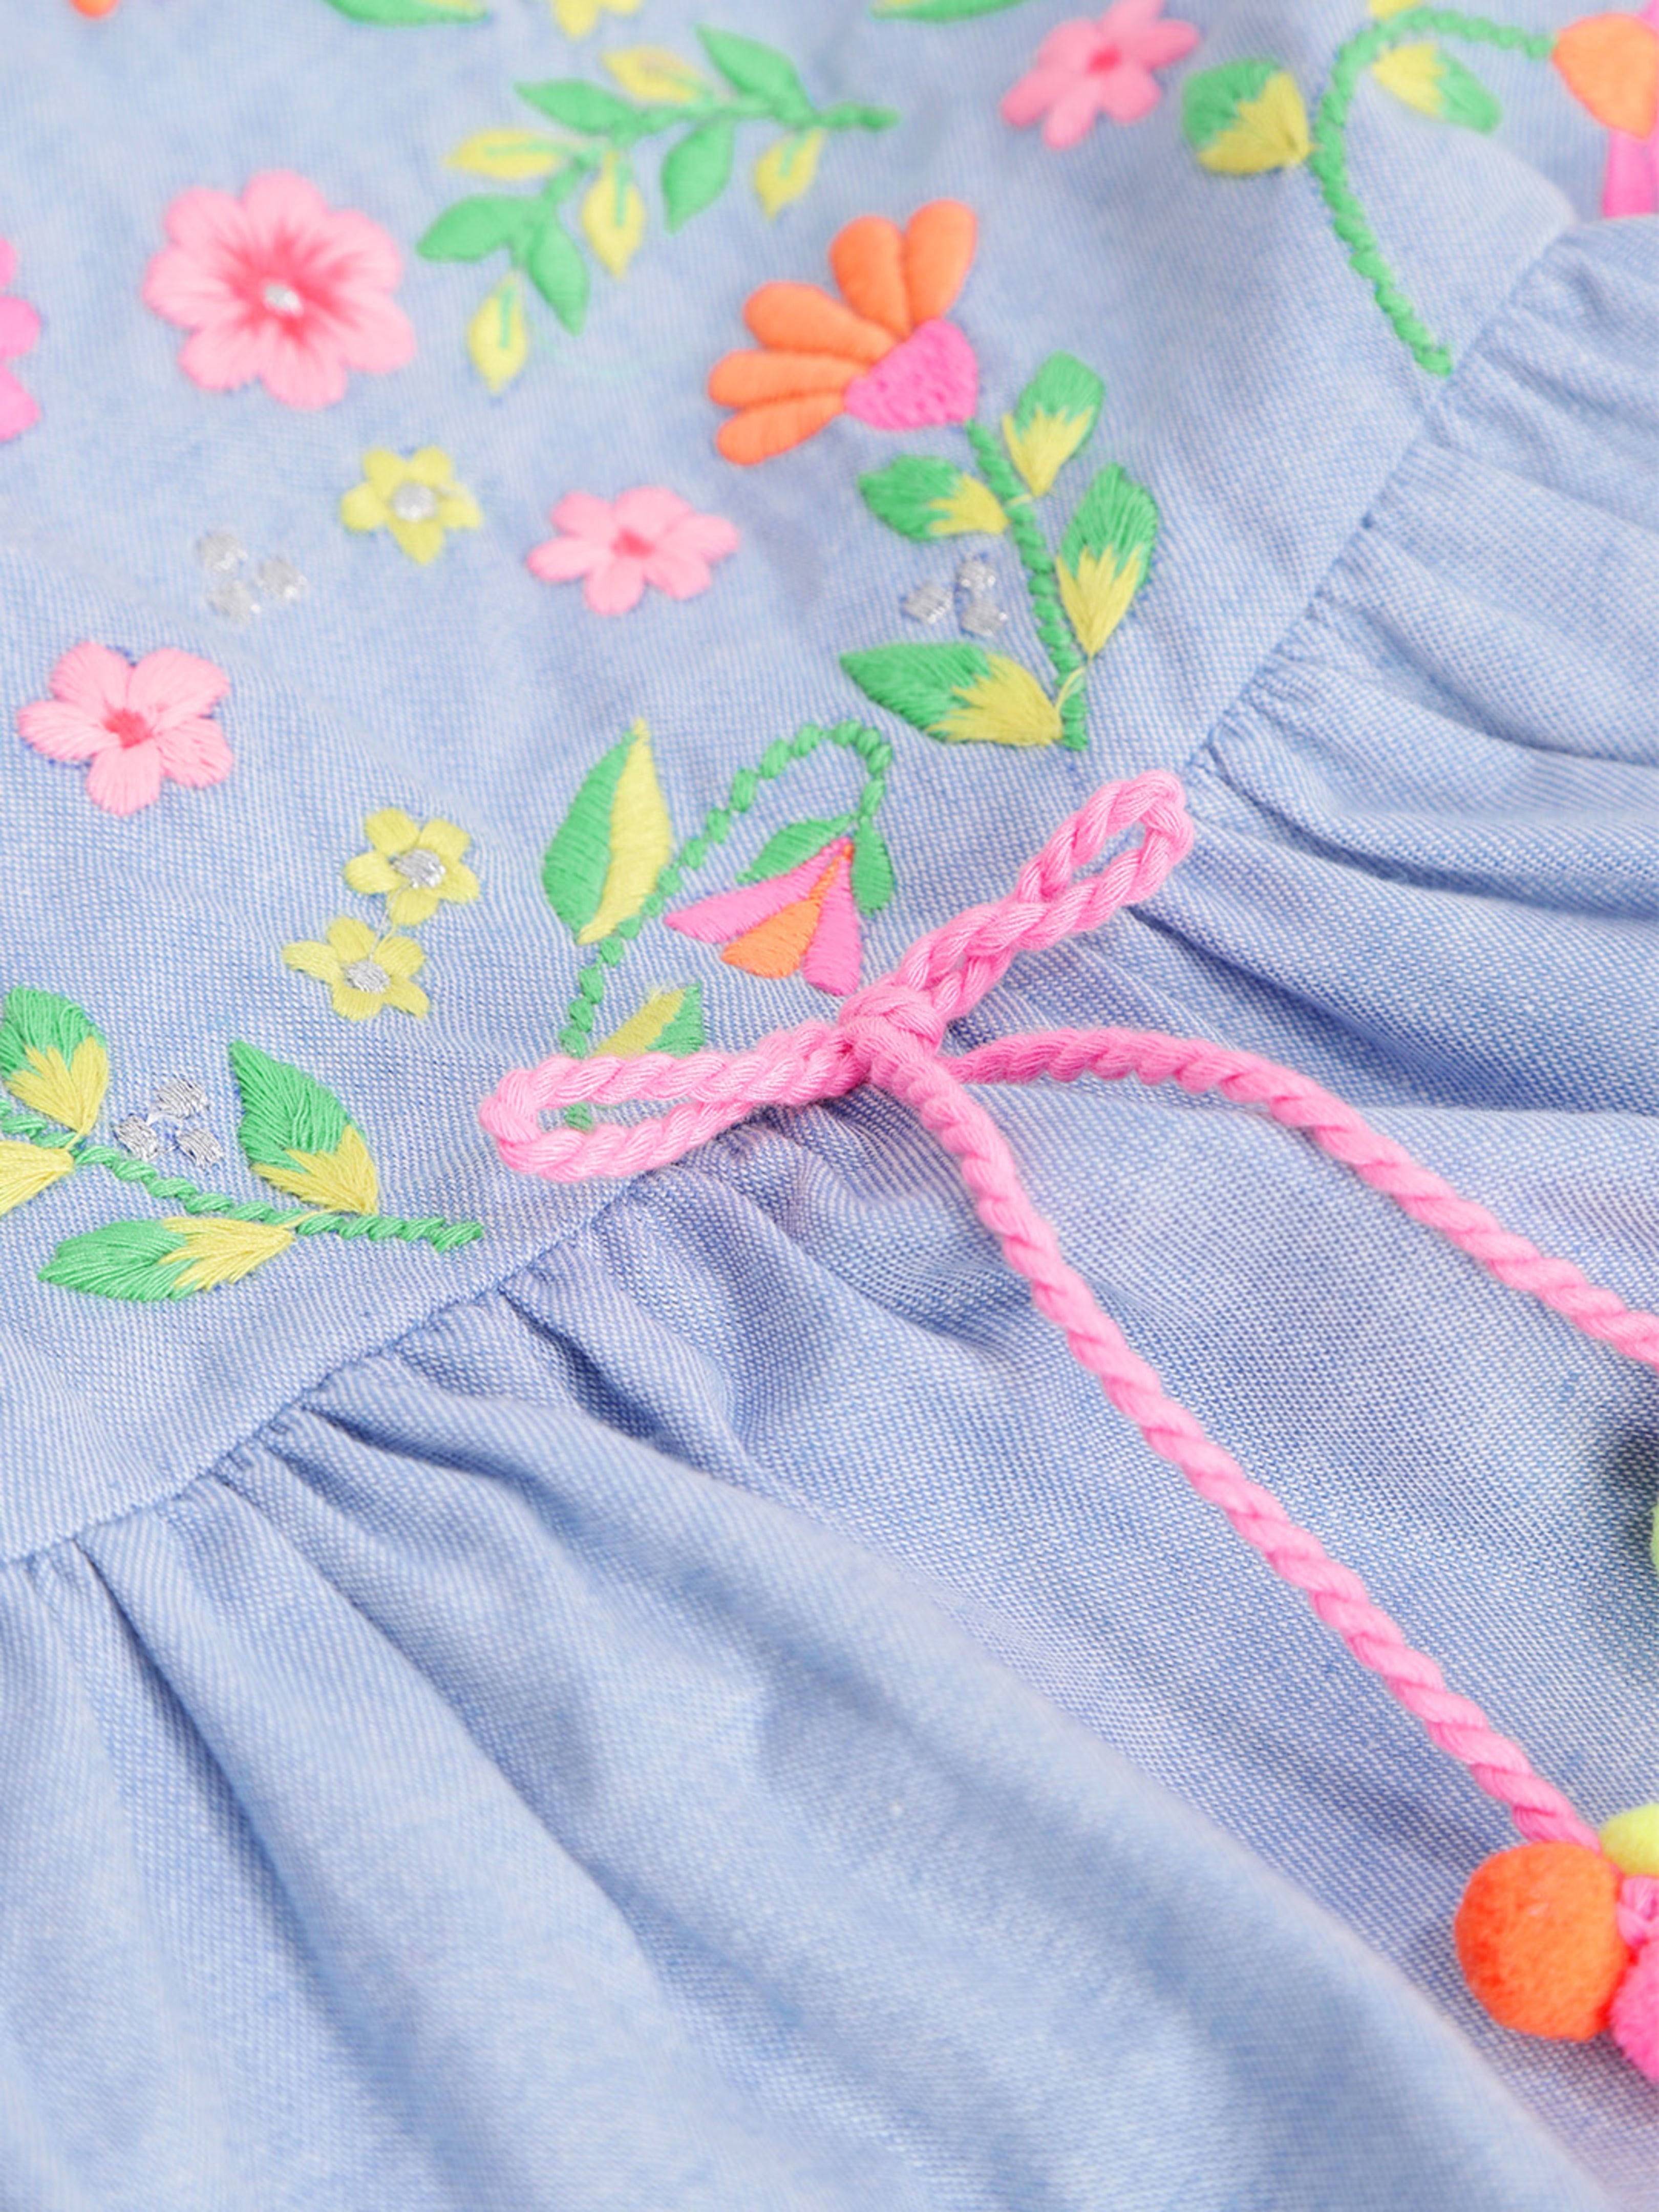 Nautinati Girls Blue Floral Embroidered A-Line Dress